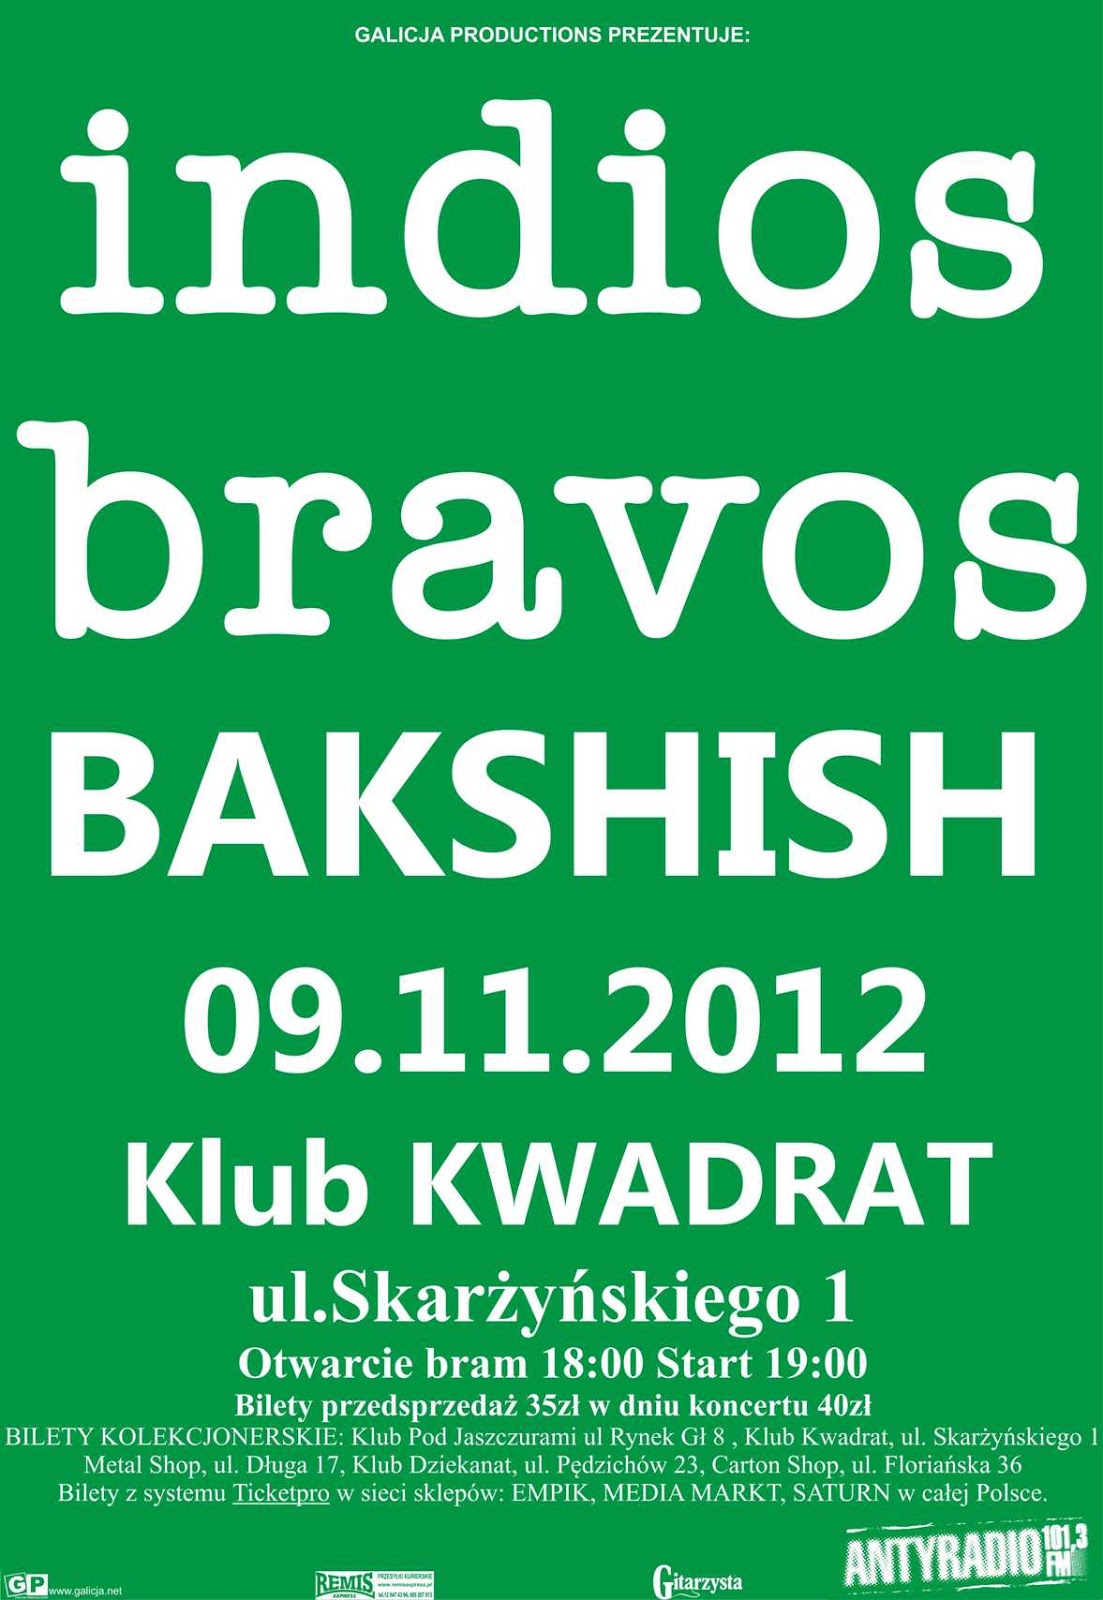 Indios Bravos i Bakshish już w ten piątek w klubie Kwadrat!